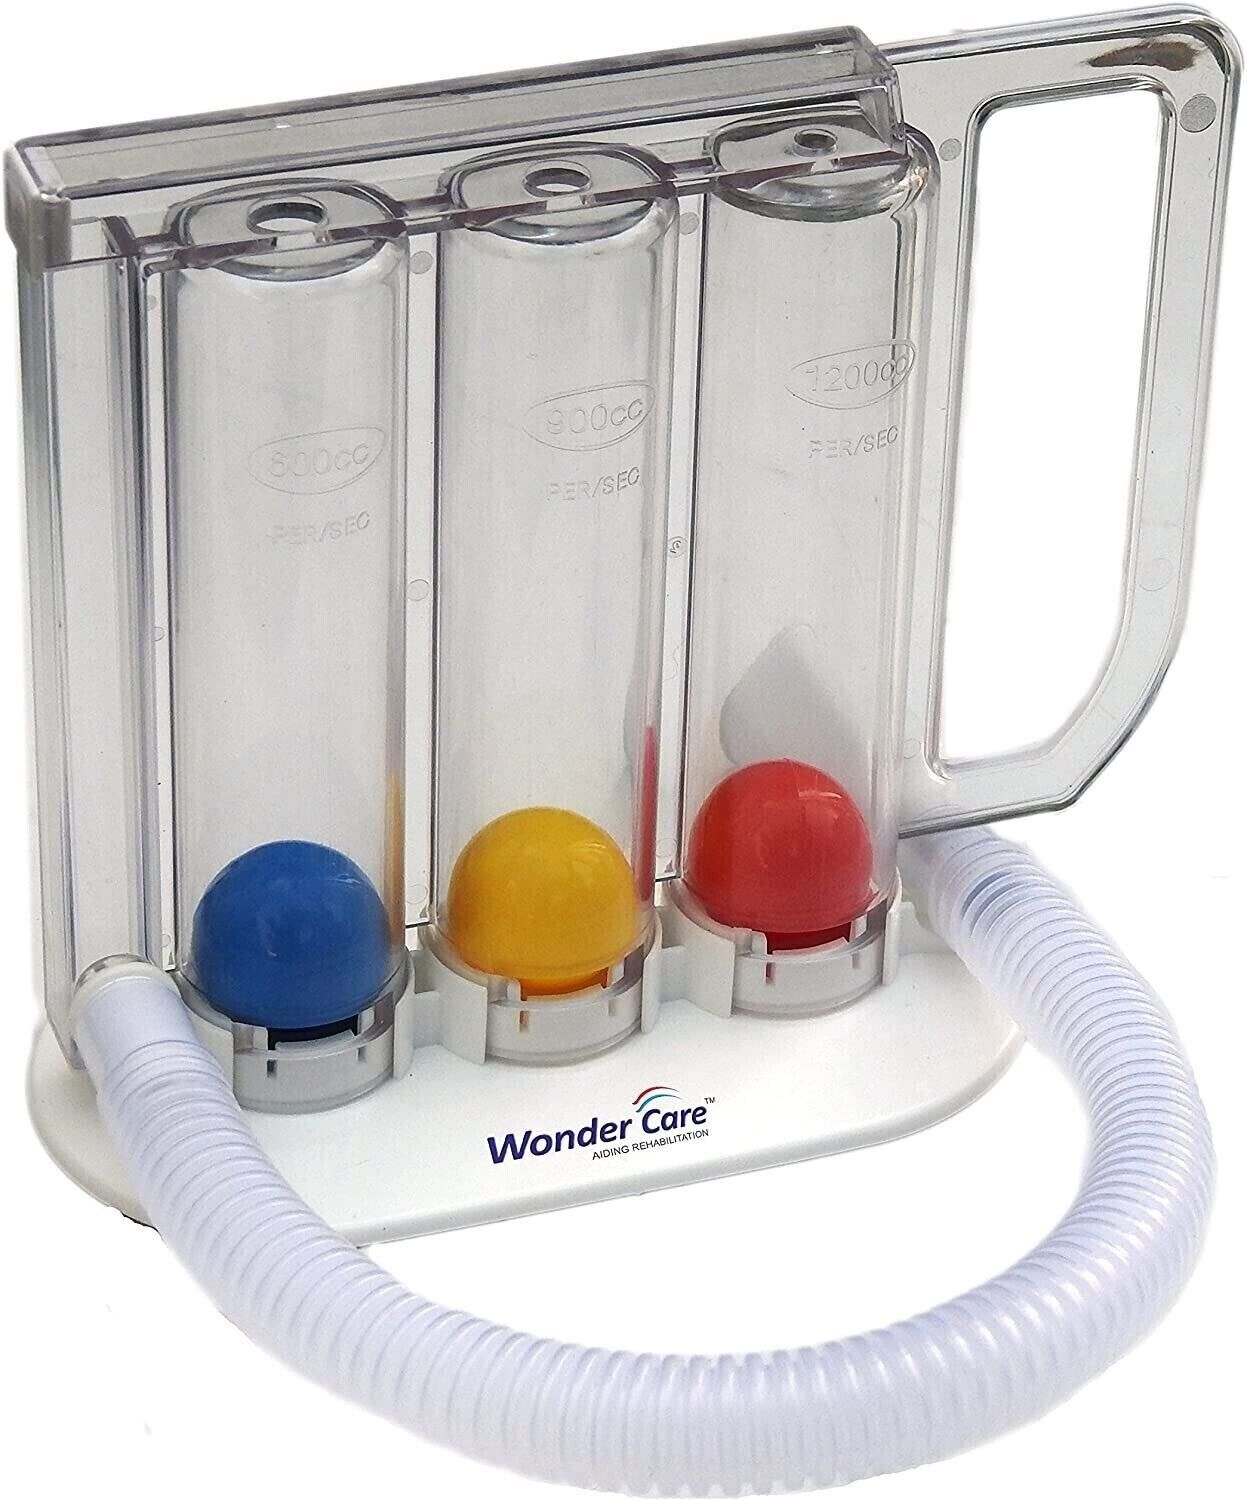 NEW Wonder Care Deep Breathing Lung Exerciser Washable & Hygienic Breath Measure wondercare - фотография #11